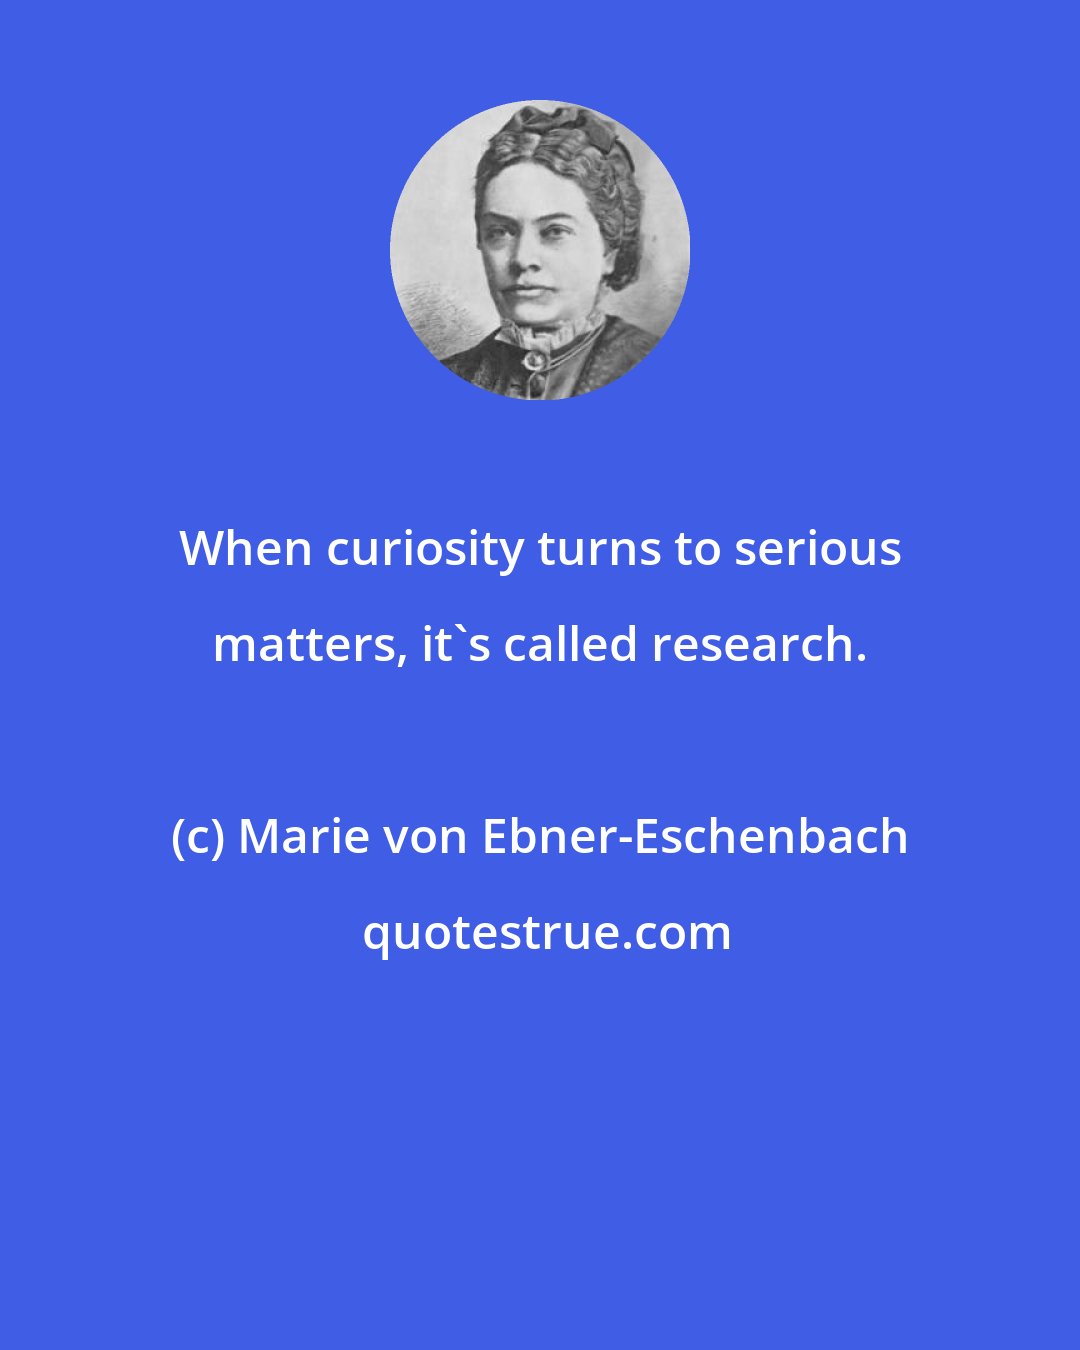 Marie von Ebner-Eschenbach: When curiosity turns to serious matters, it's called research.